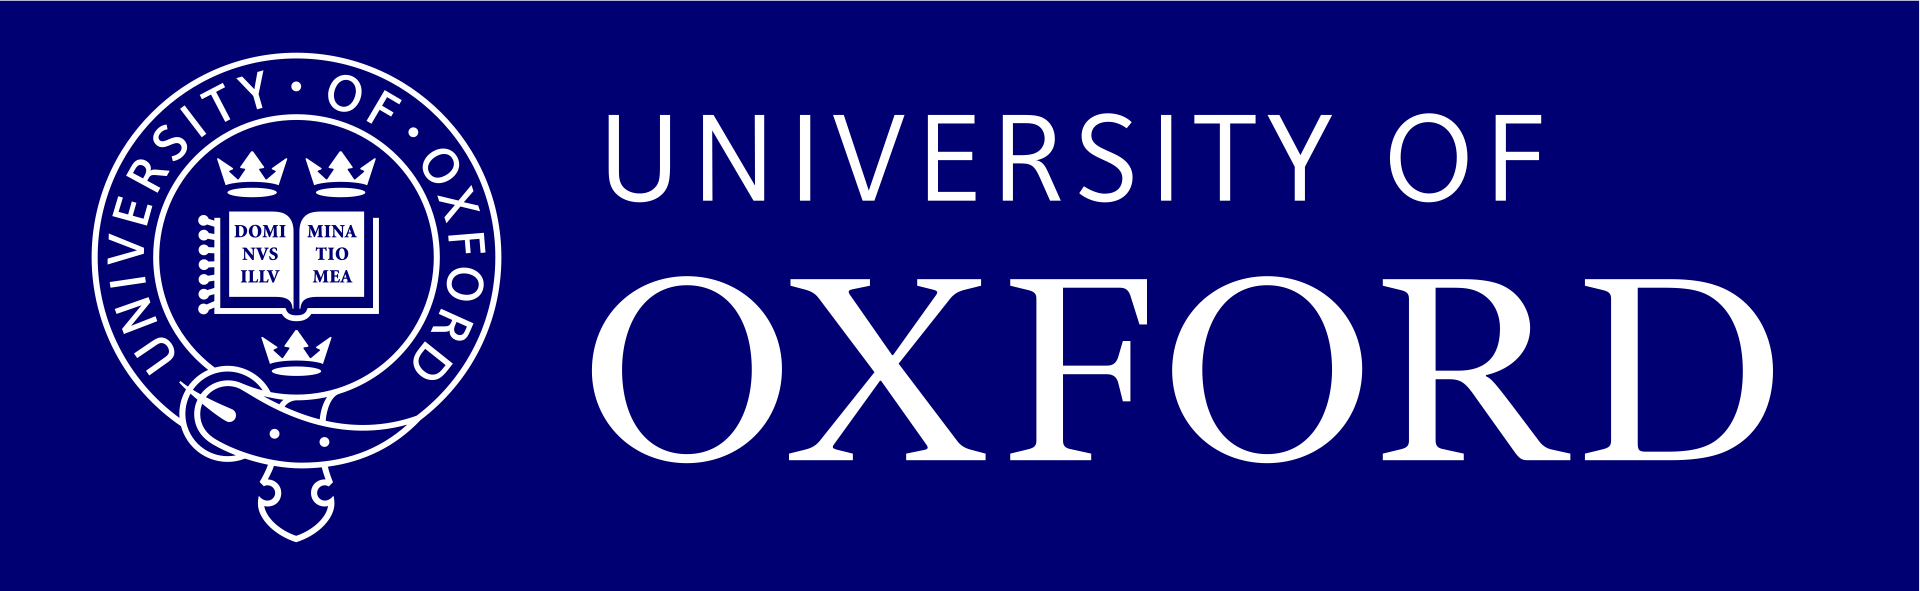 Oxford rectangle copy